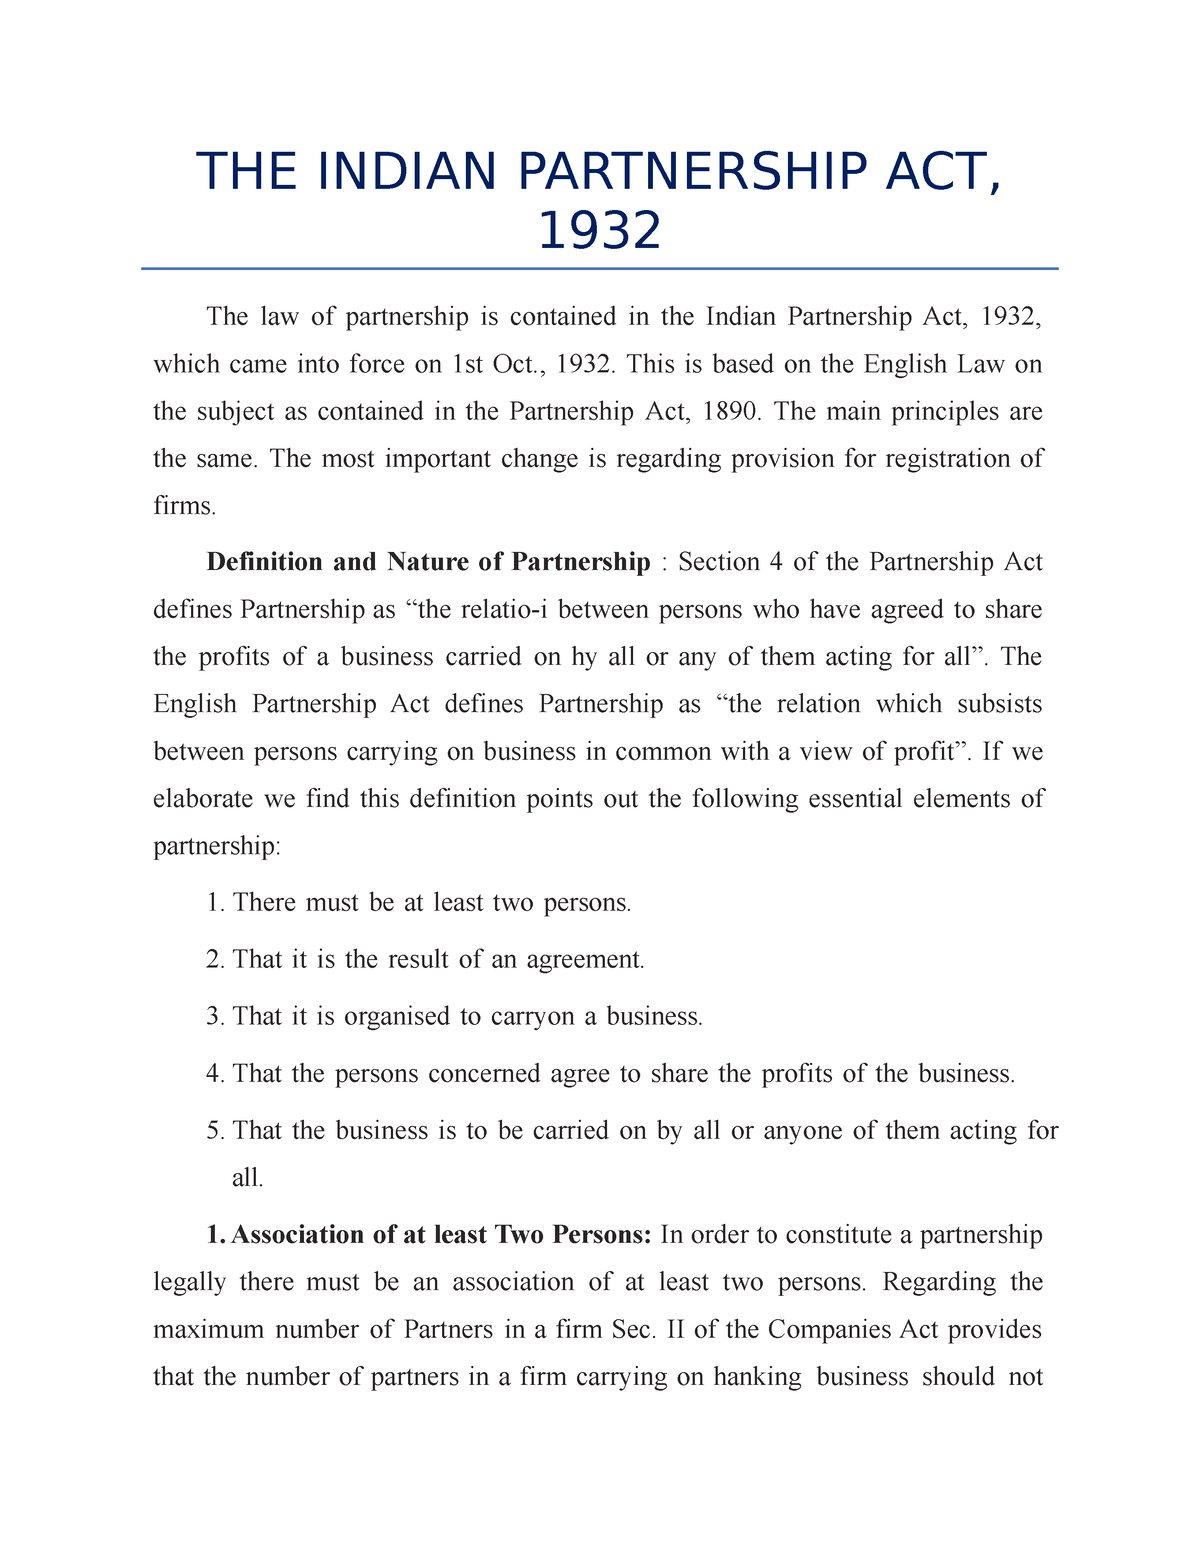 case study on indian partnership act 1932